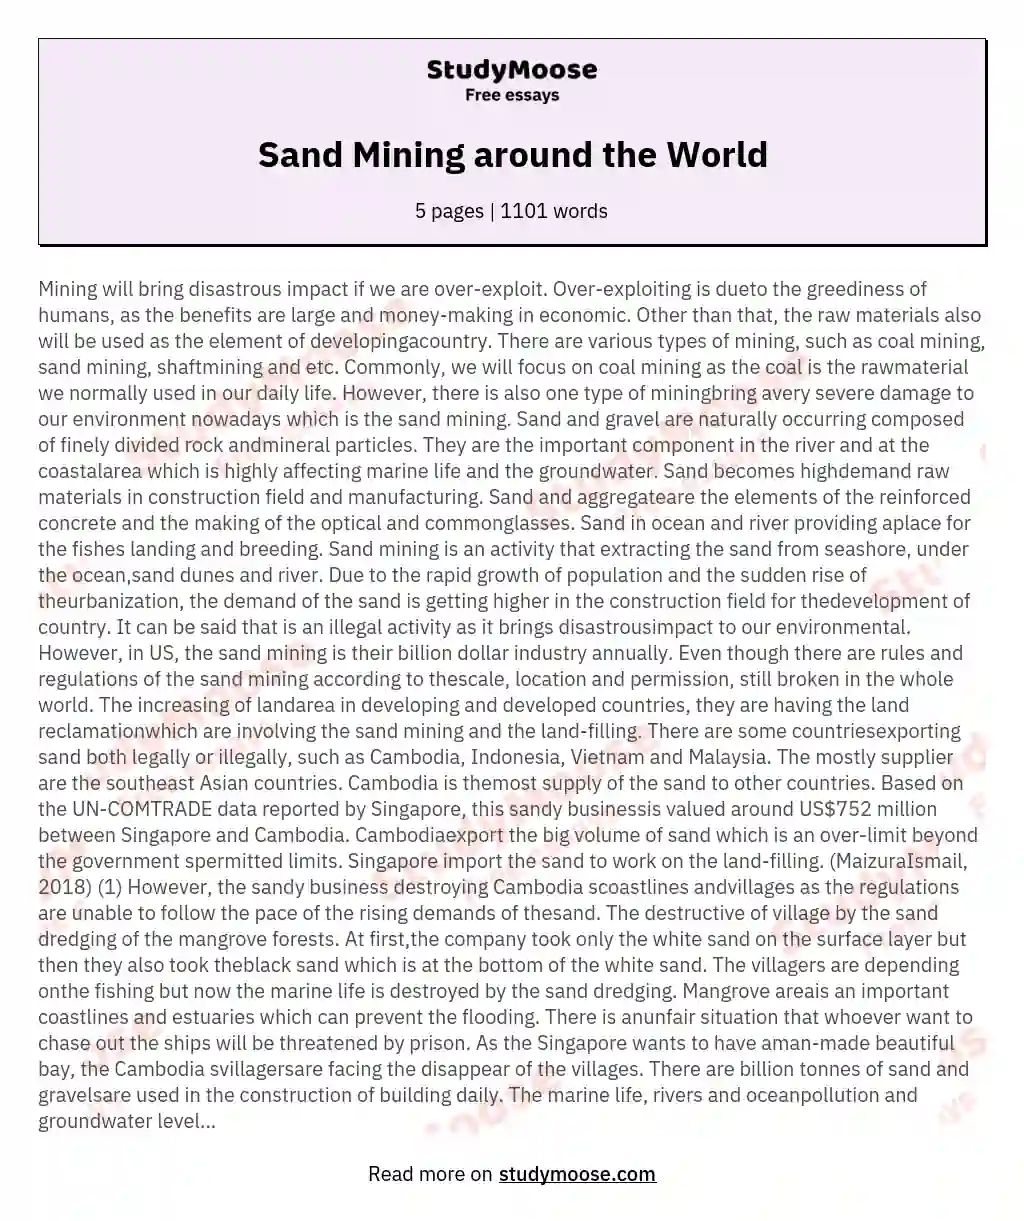 Sand Mining around the World essay